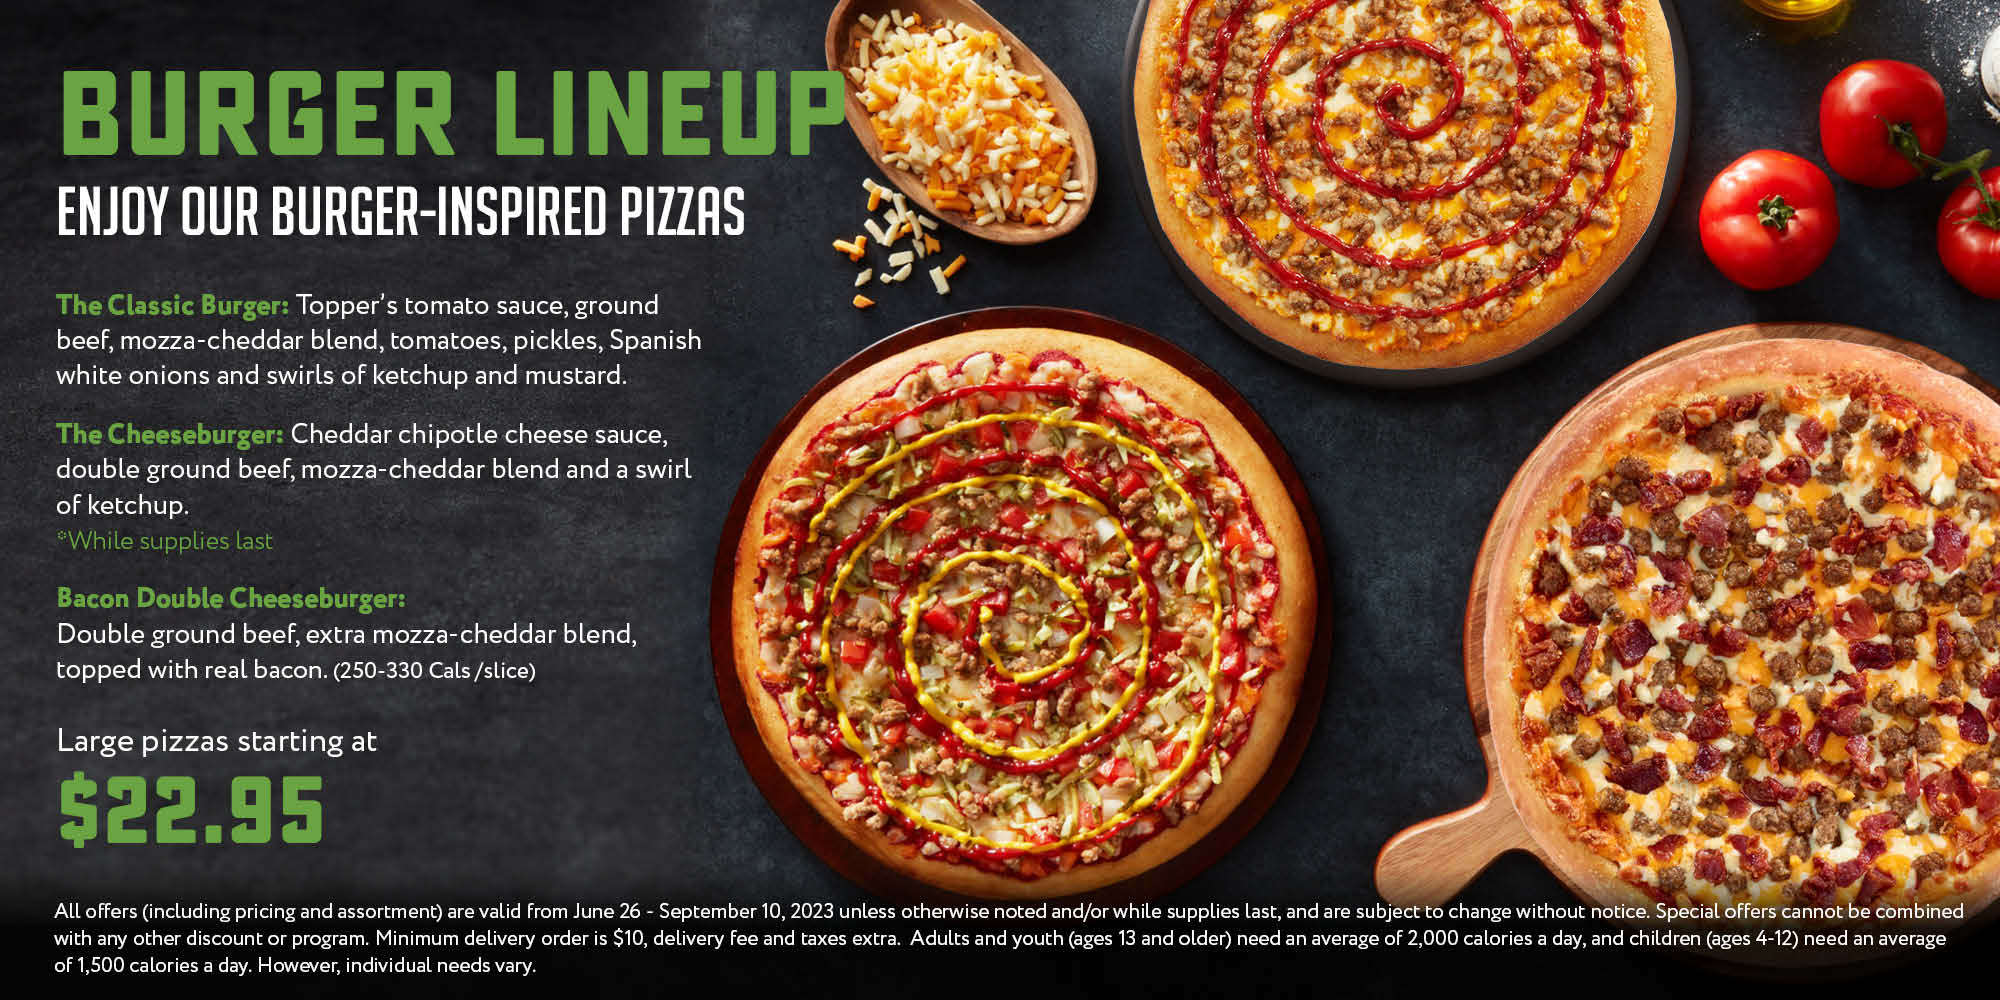 Burger Lineup - Enjoy our Burger-inspired pizzas.